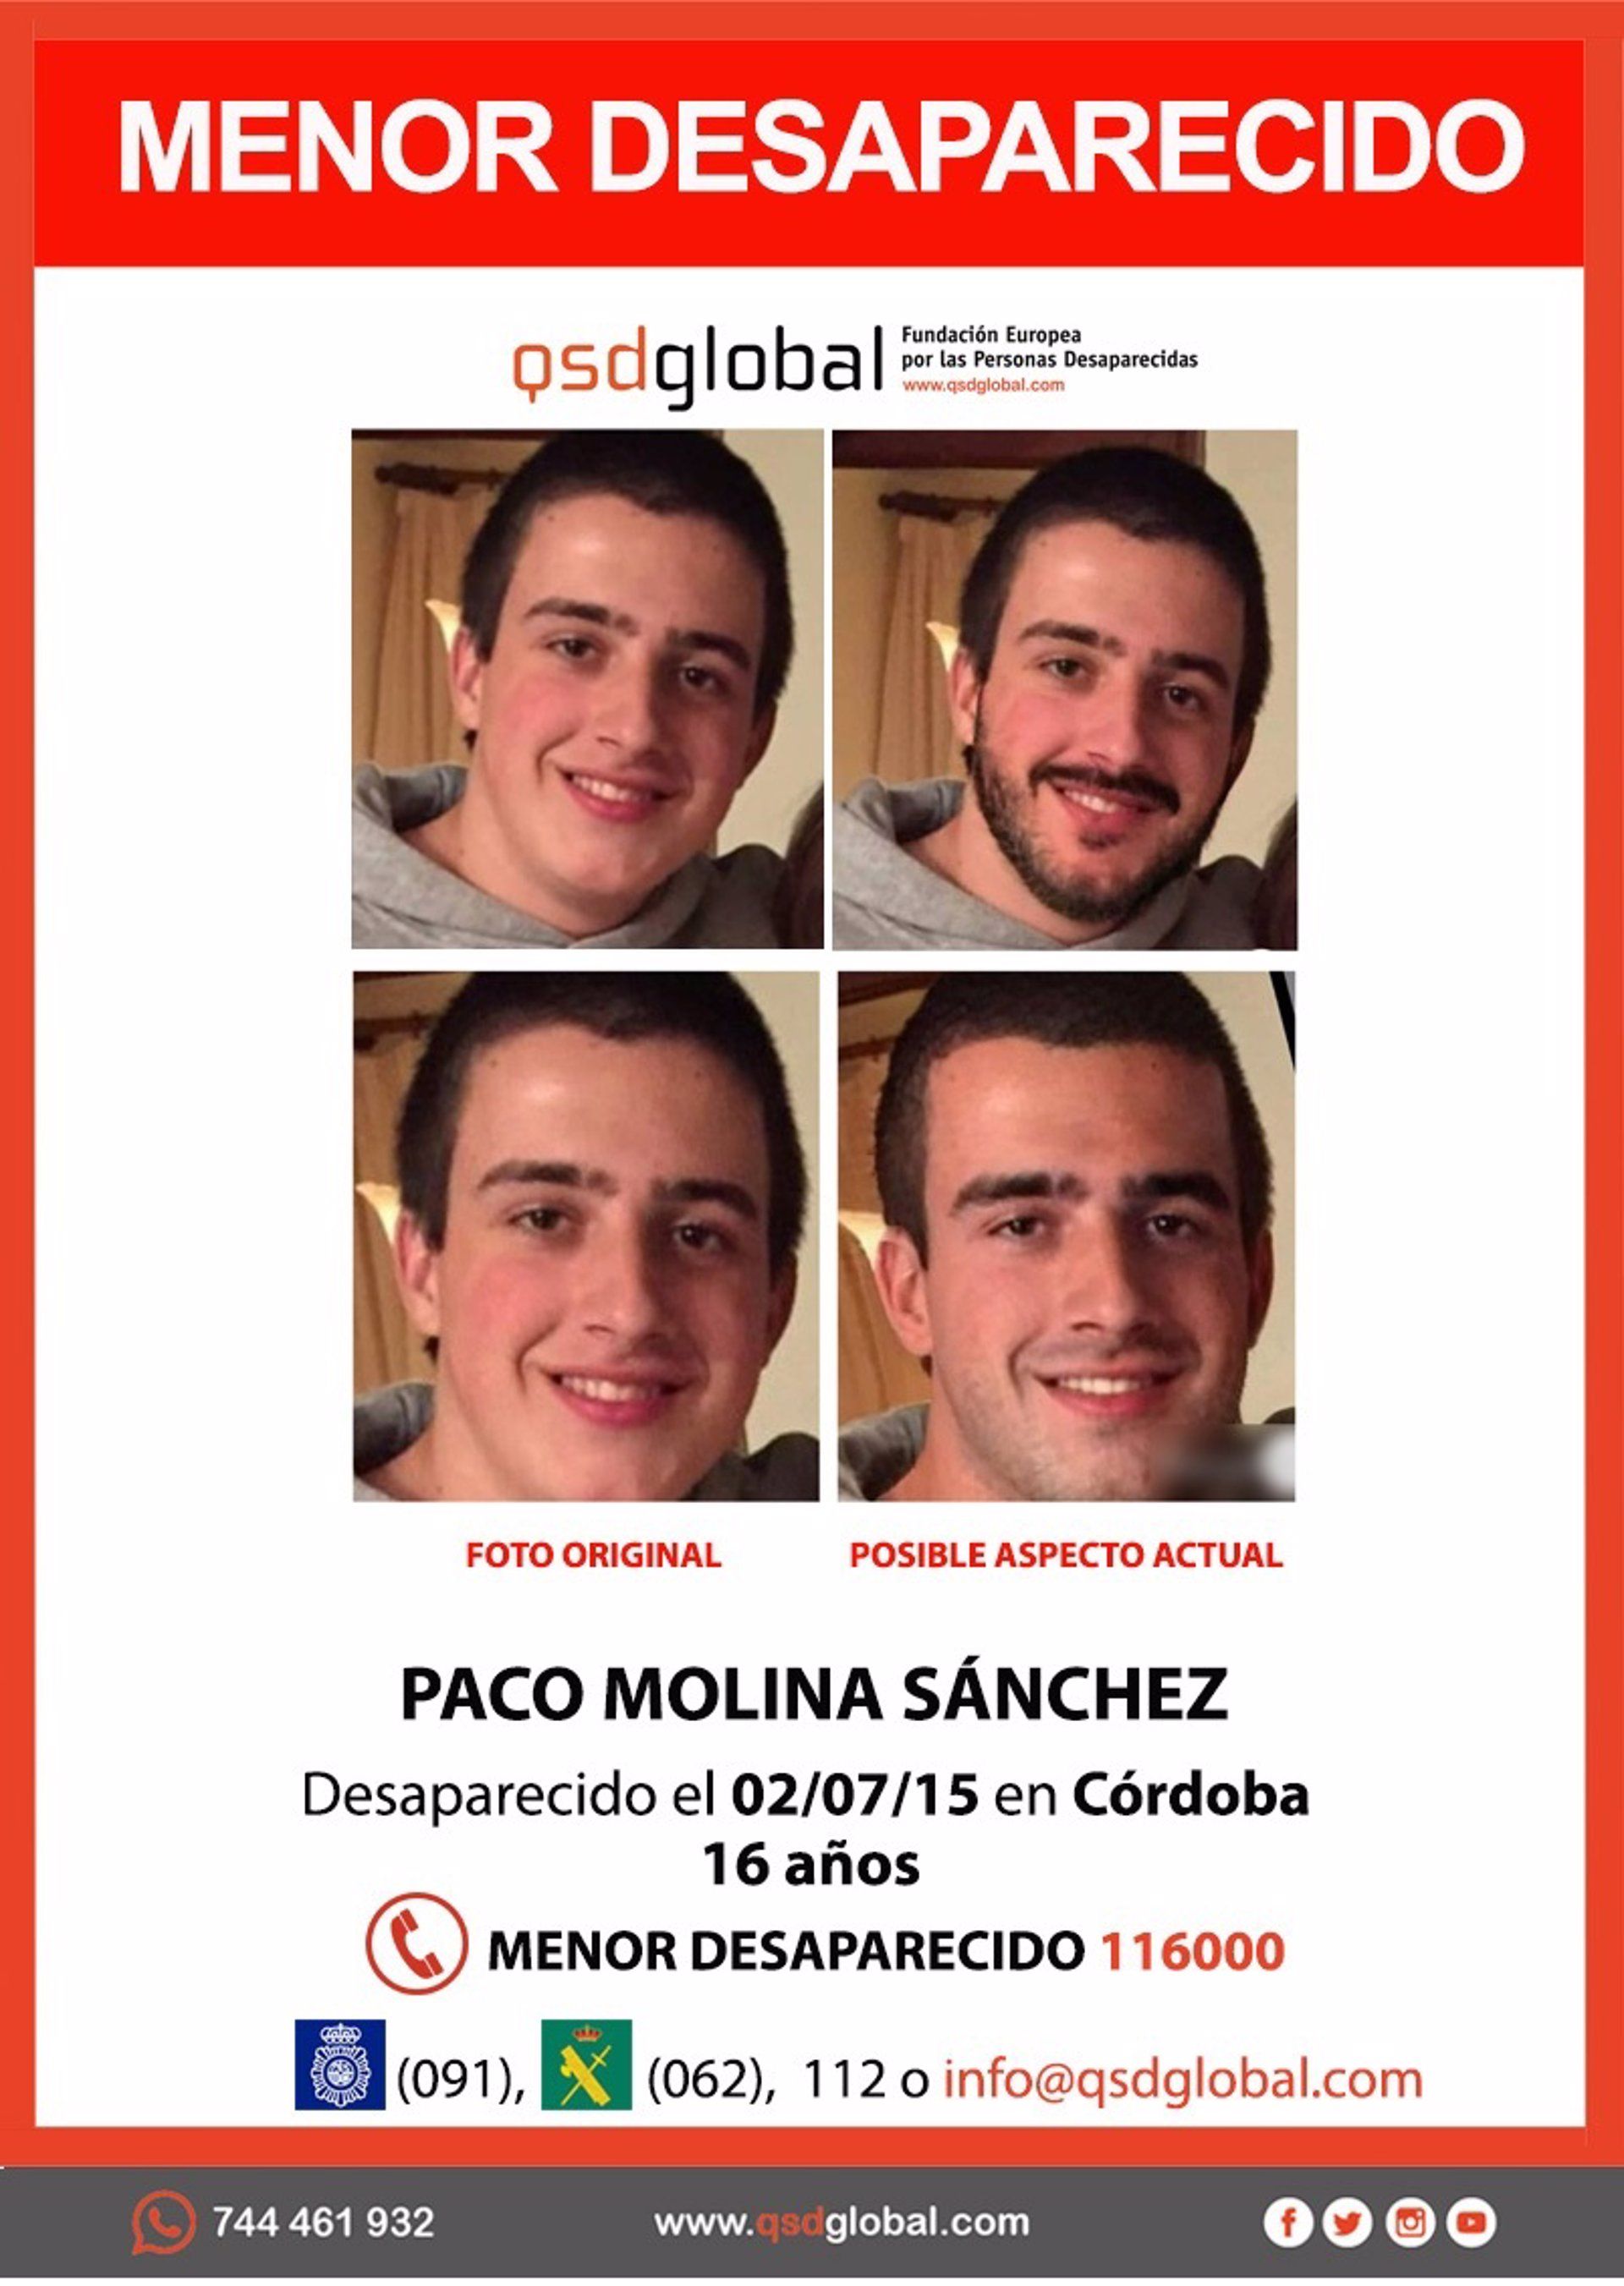 Posible imagen actual de Paco Molina, desaparecido en Córdoba en 2015.